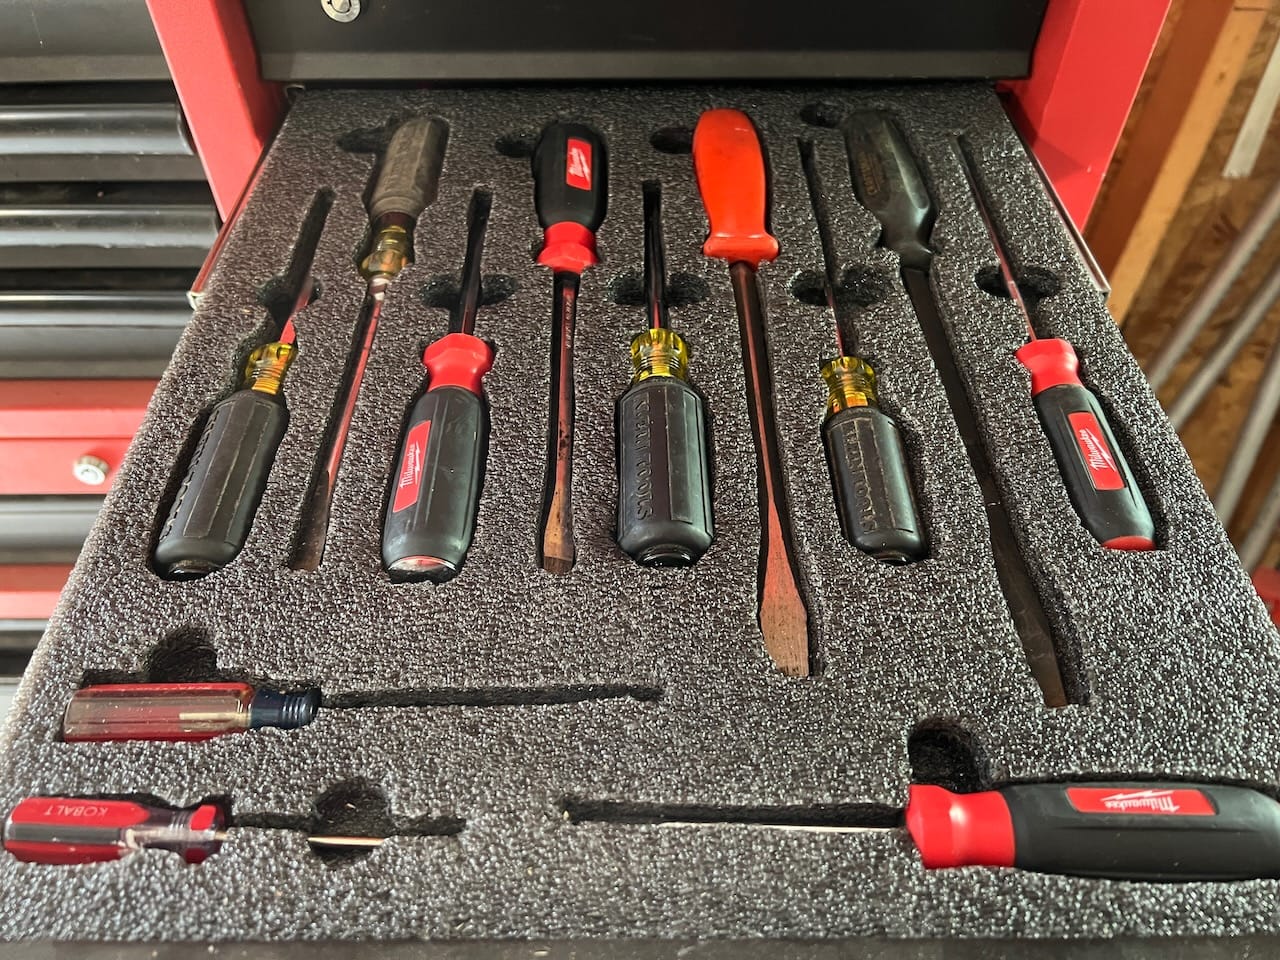 Flathead screwdrivers organized in Kaizen Foam.